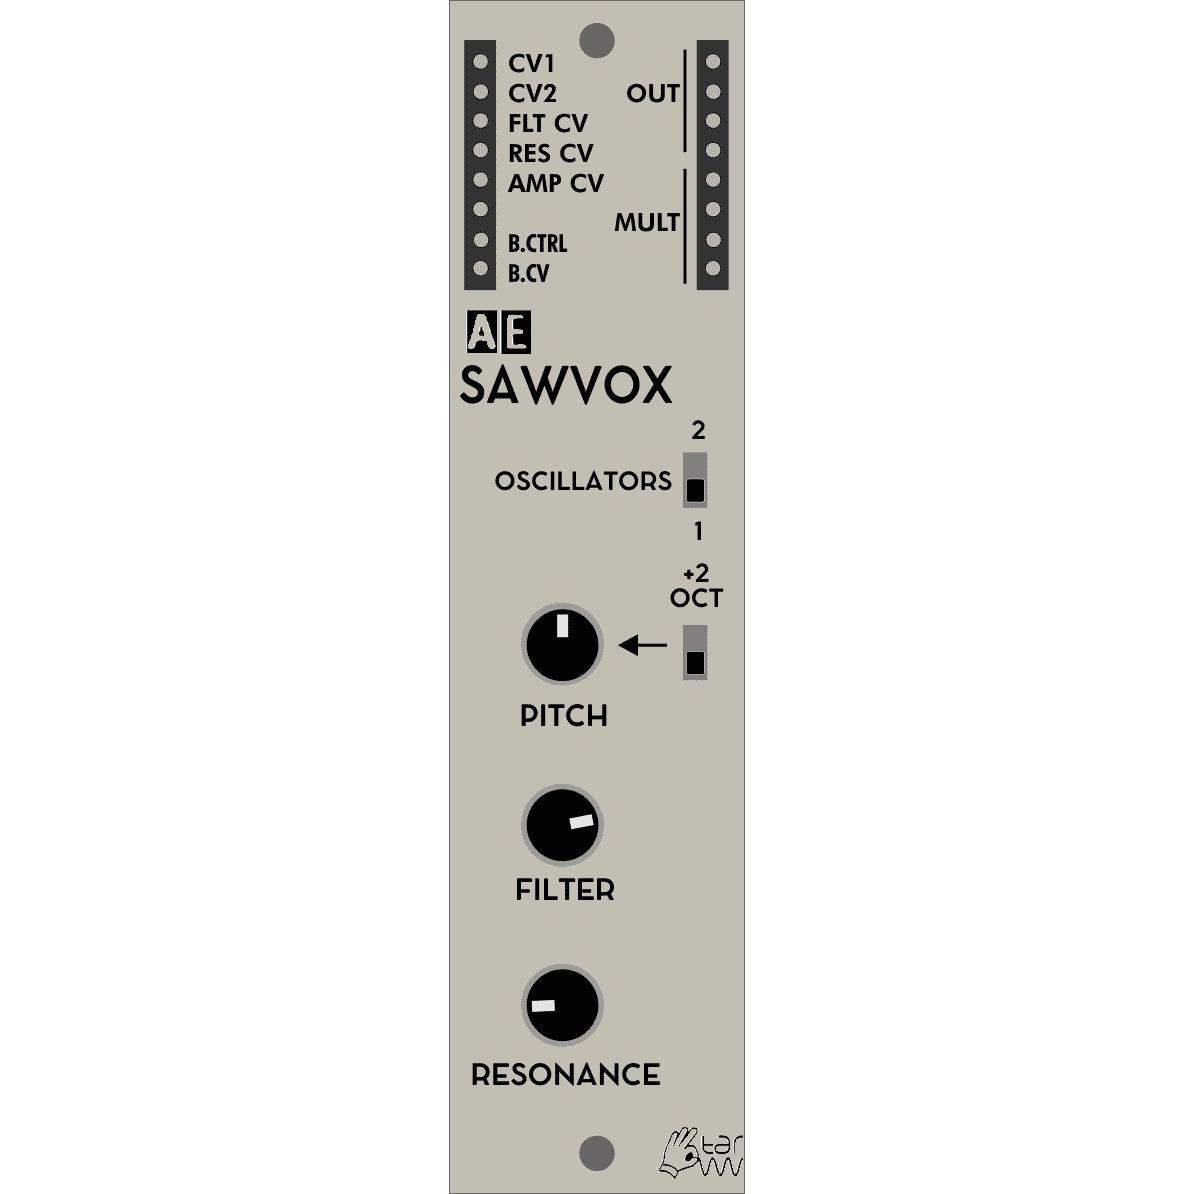 SAWVOX Module a Nasty 8-Bit Synth Voice for AE Modular